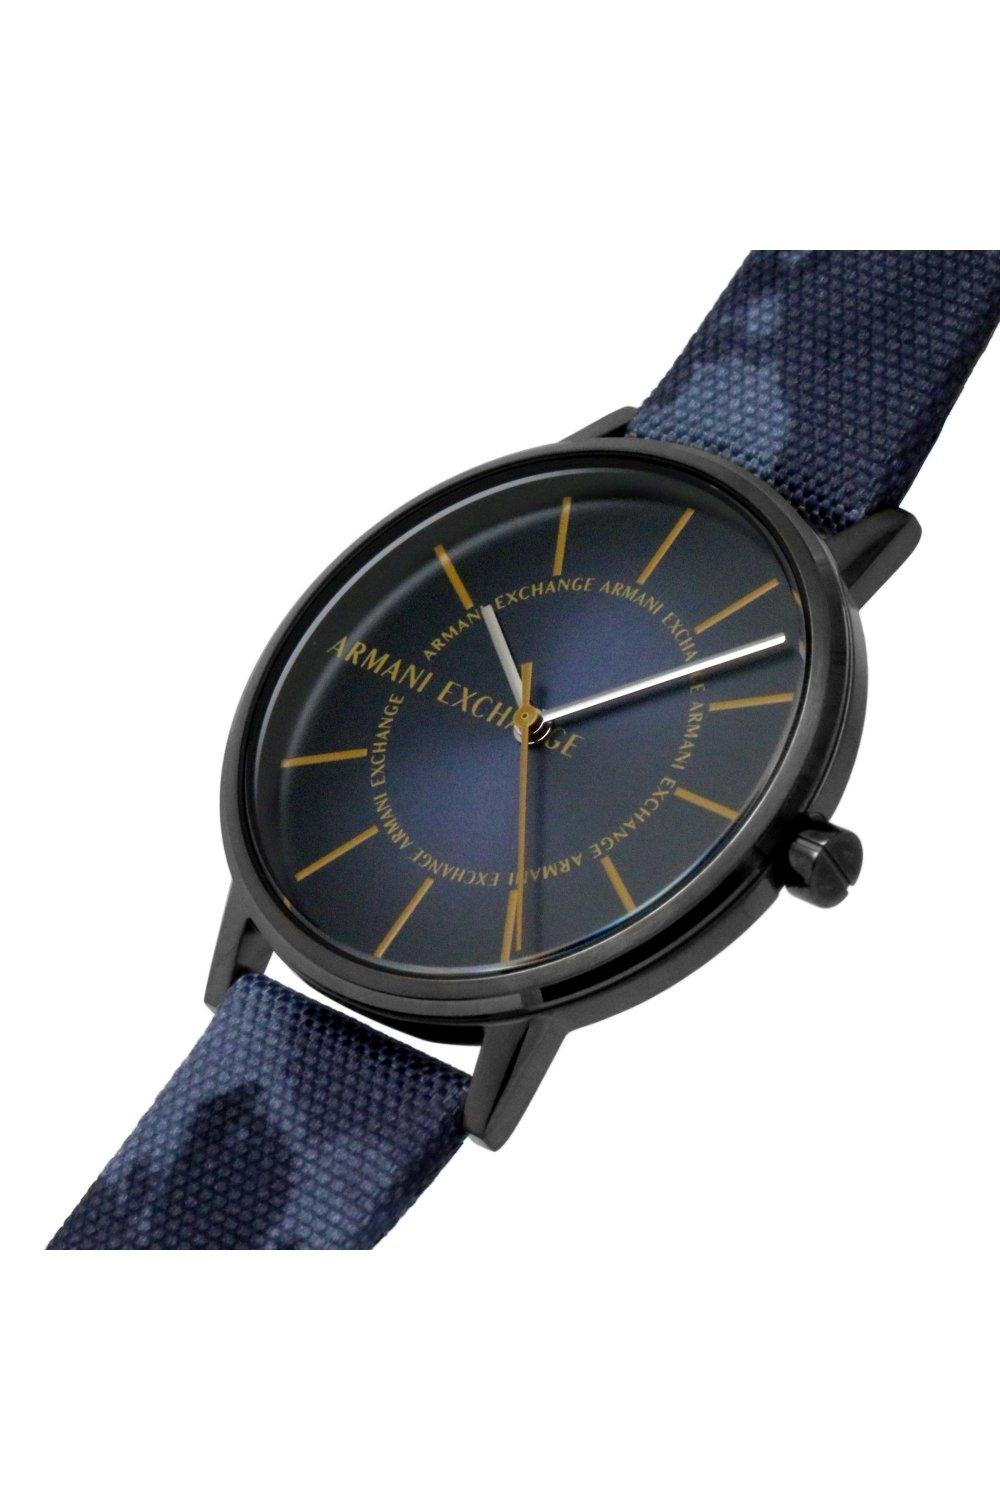 Watches | Stainless Steel Quartz Ax2750 Fashion Exchange Analogue Armani | Watch 